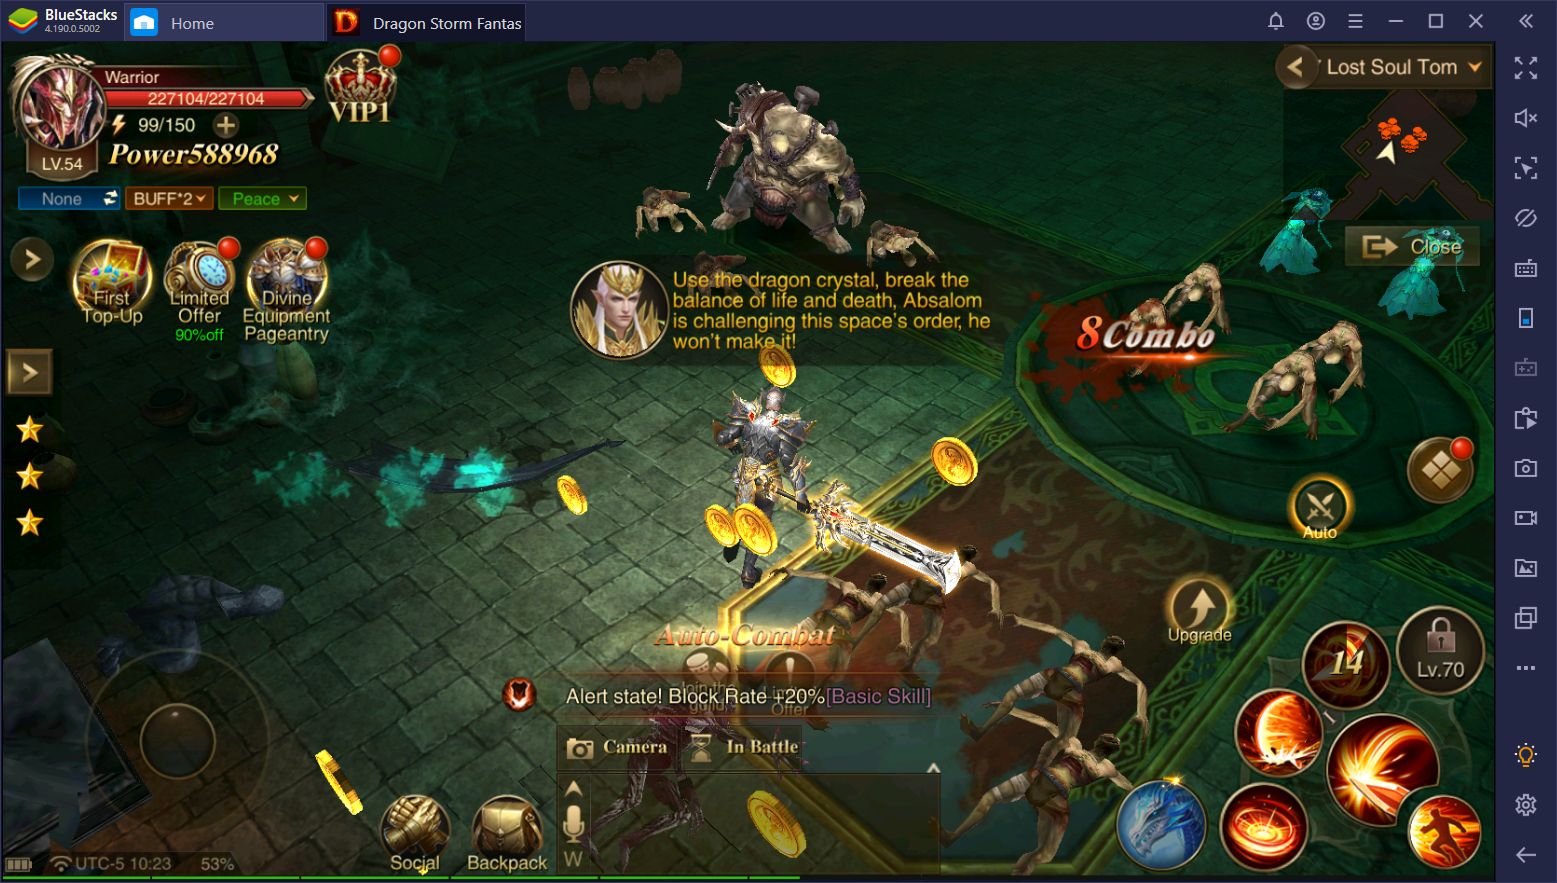 Dragon Storm Fantasy Gold Farming - Using BlueStacks to Generate Gold Automatically